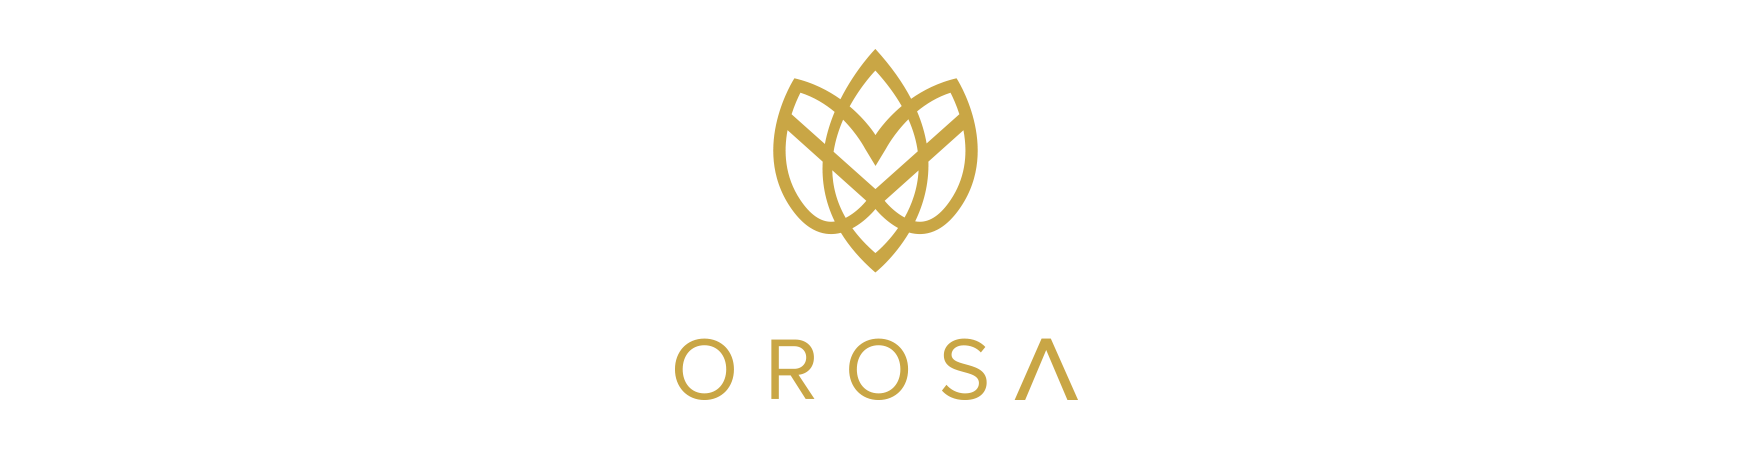 Orosa